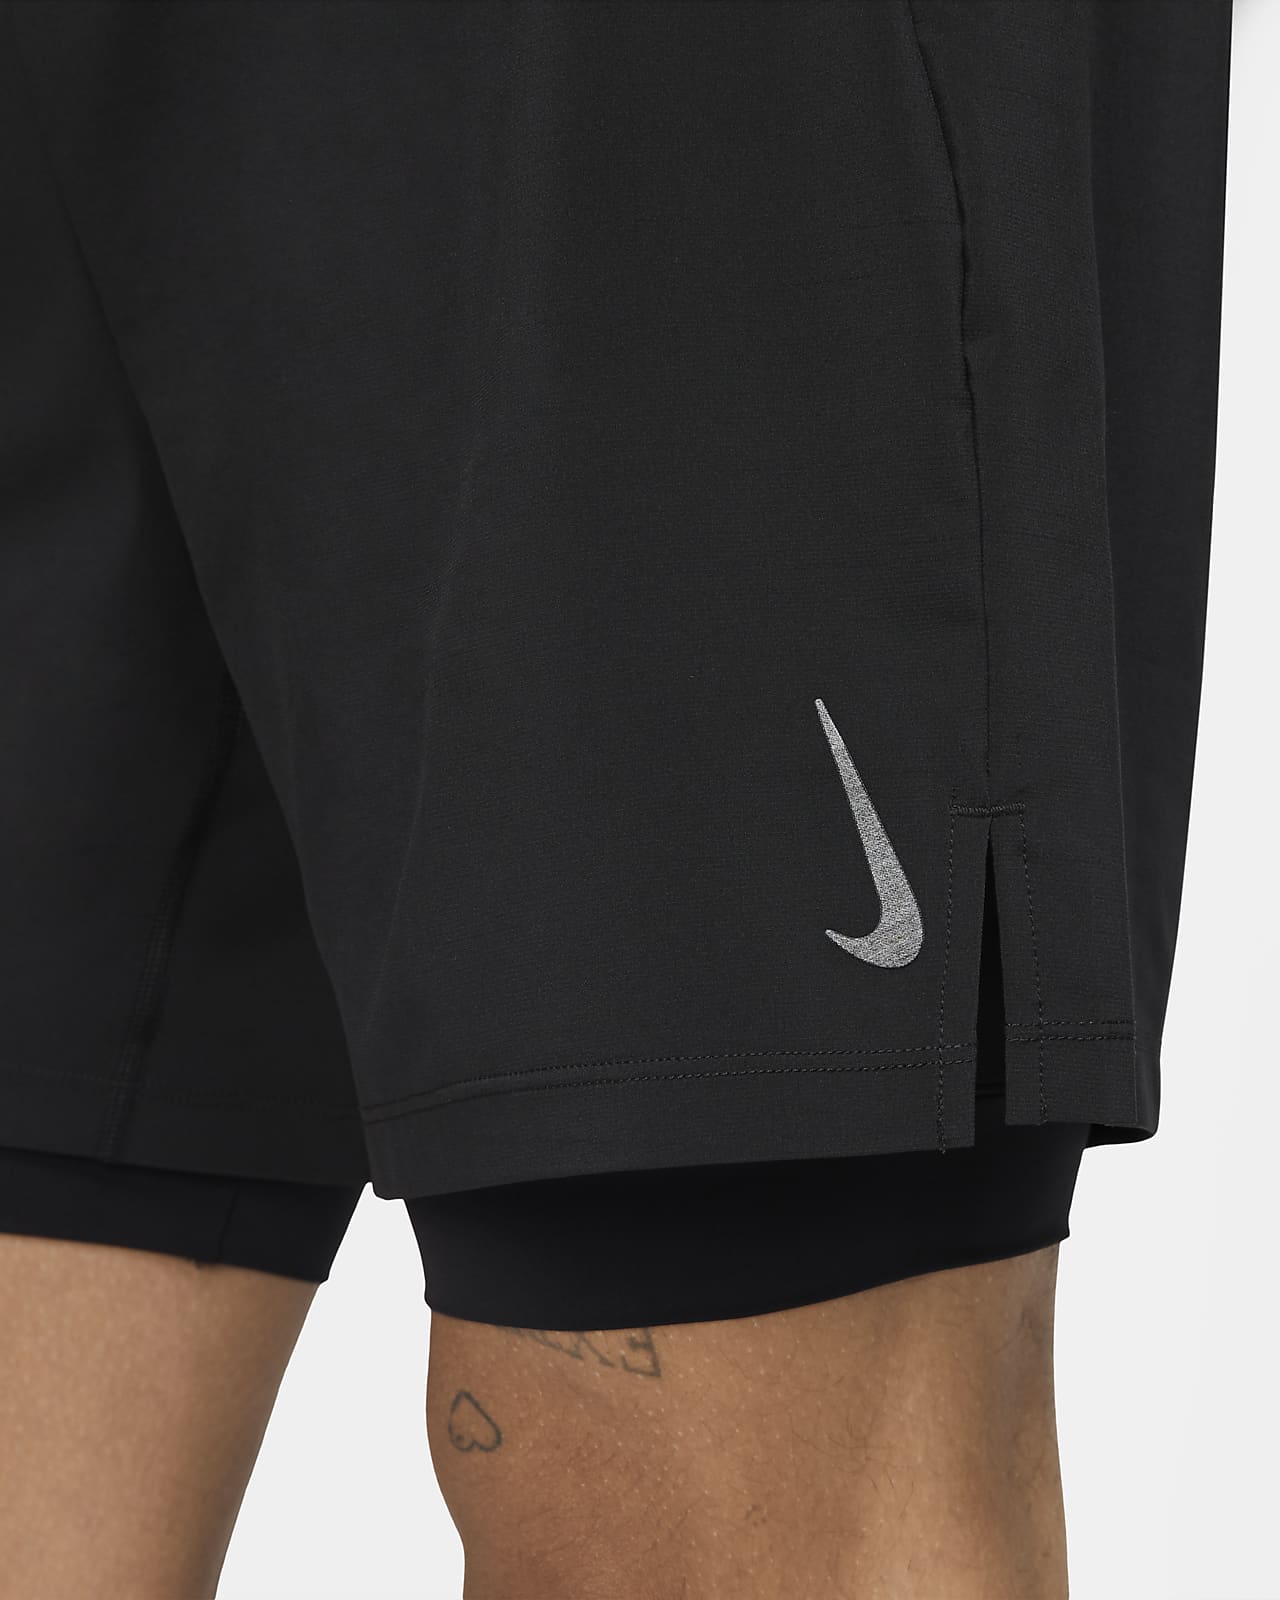 Nike Forward Shorts Men's Shorts. Nike LU